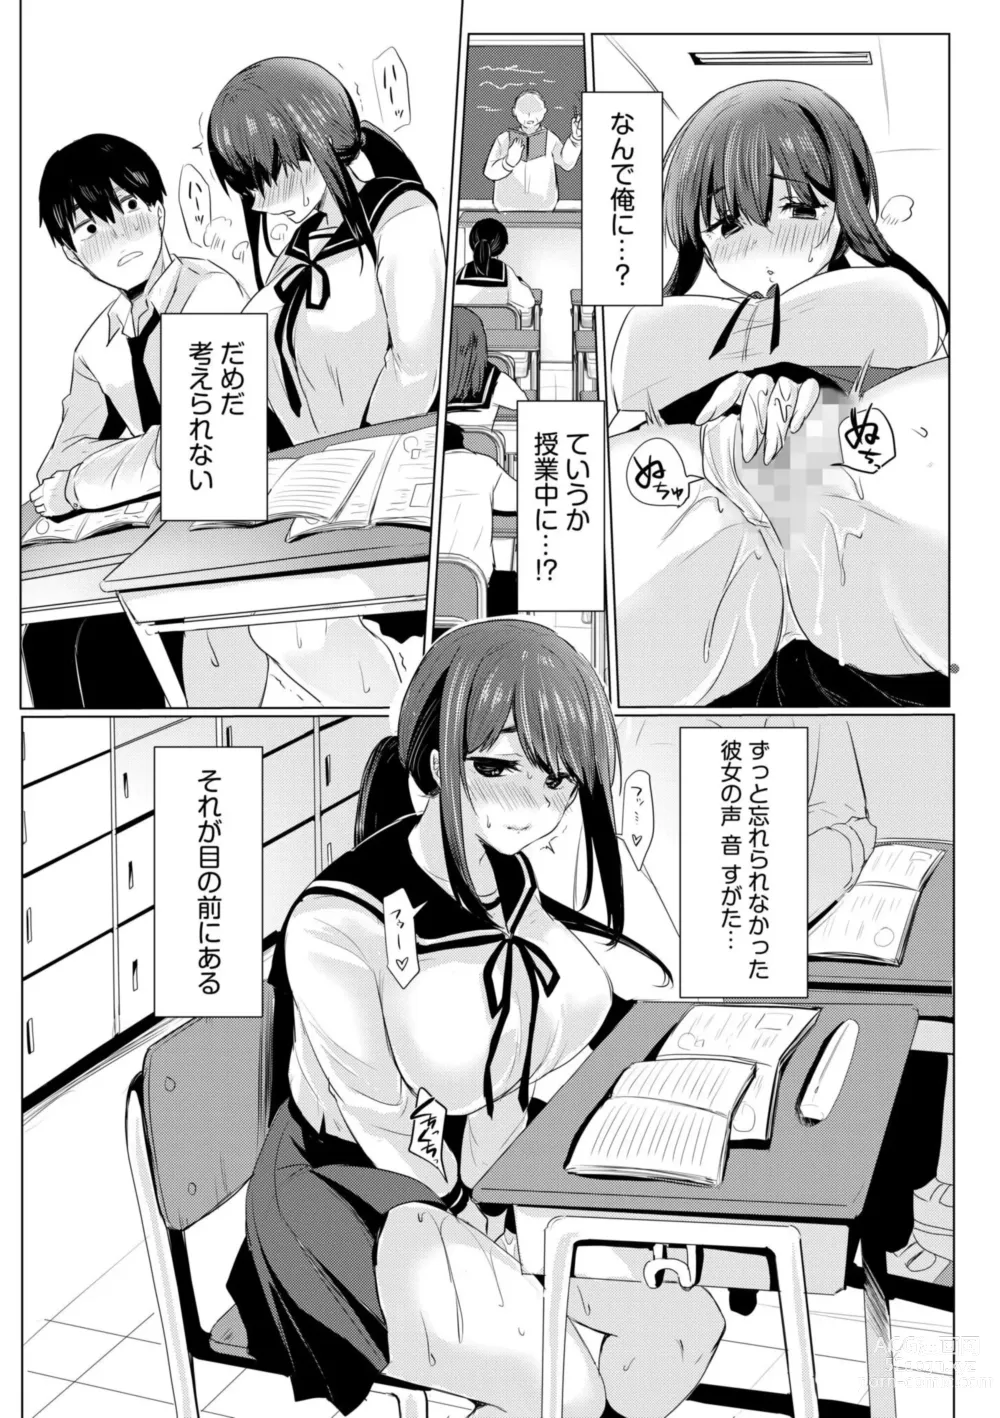 Page 10 of manga Netorarete, Miserarete. - Enchanted by being cuckolded 1